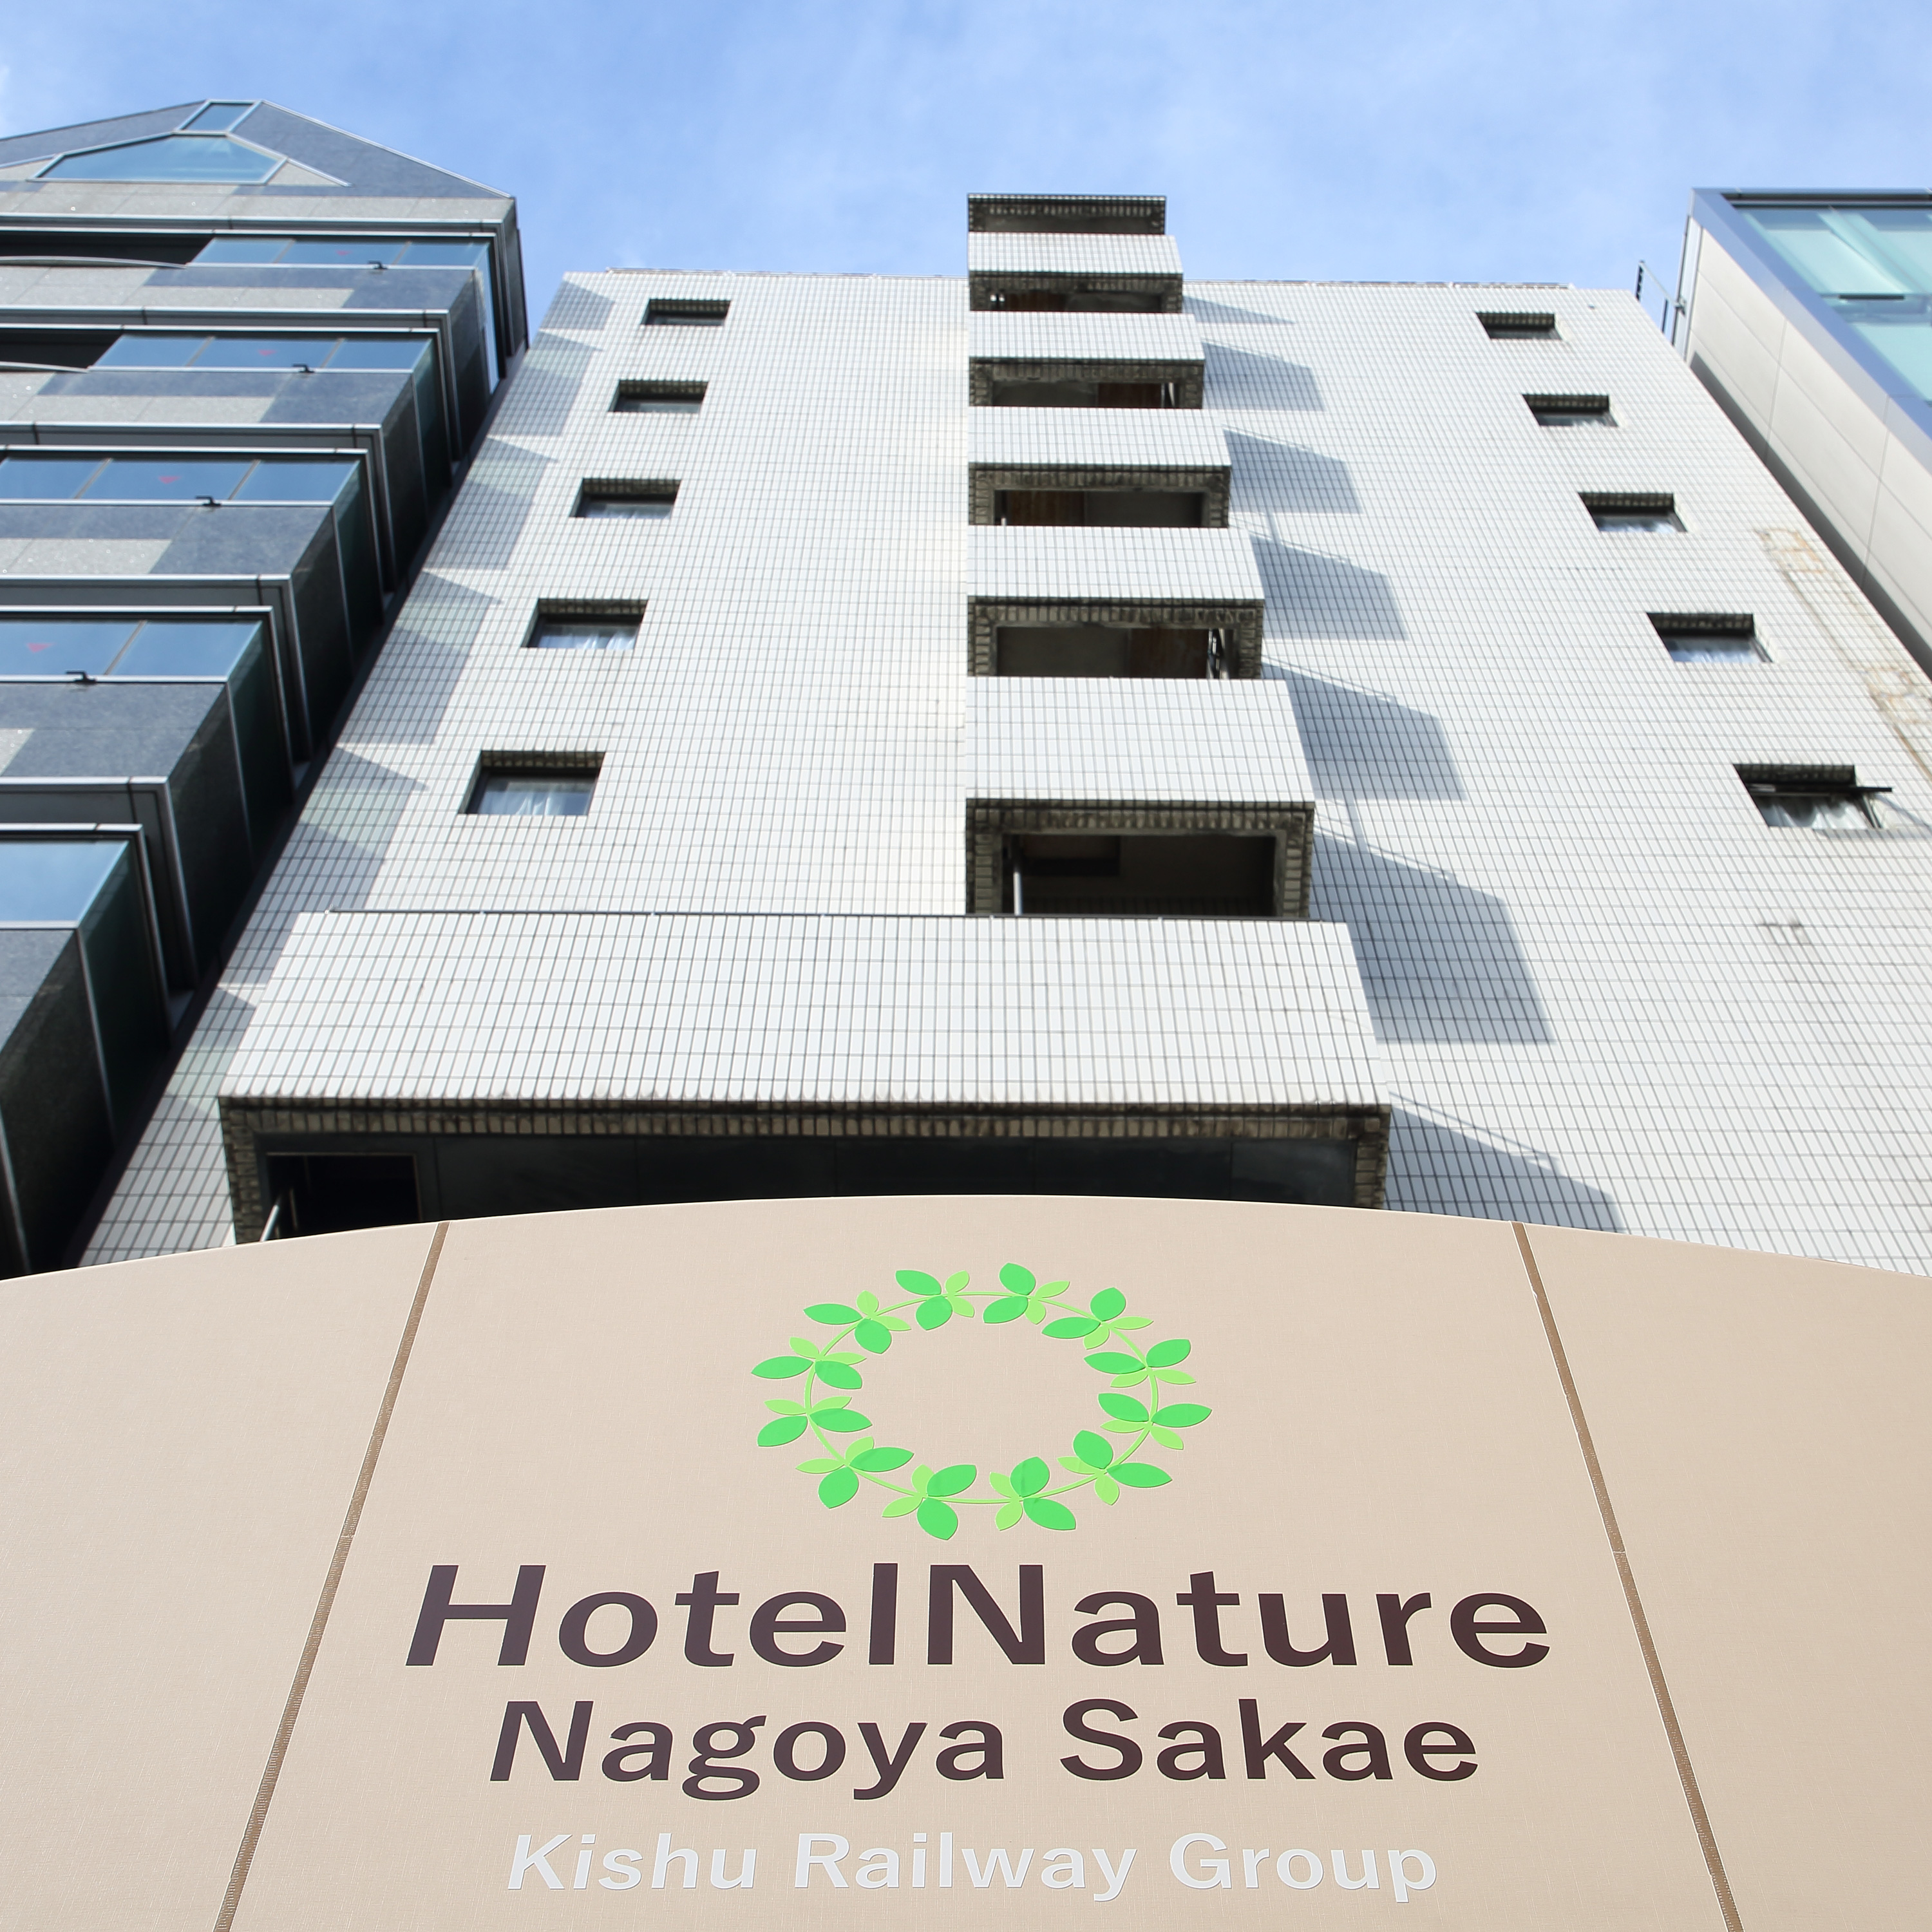 Hotel Nature Nagoya Sakae (Kishu Railway Group)